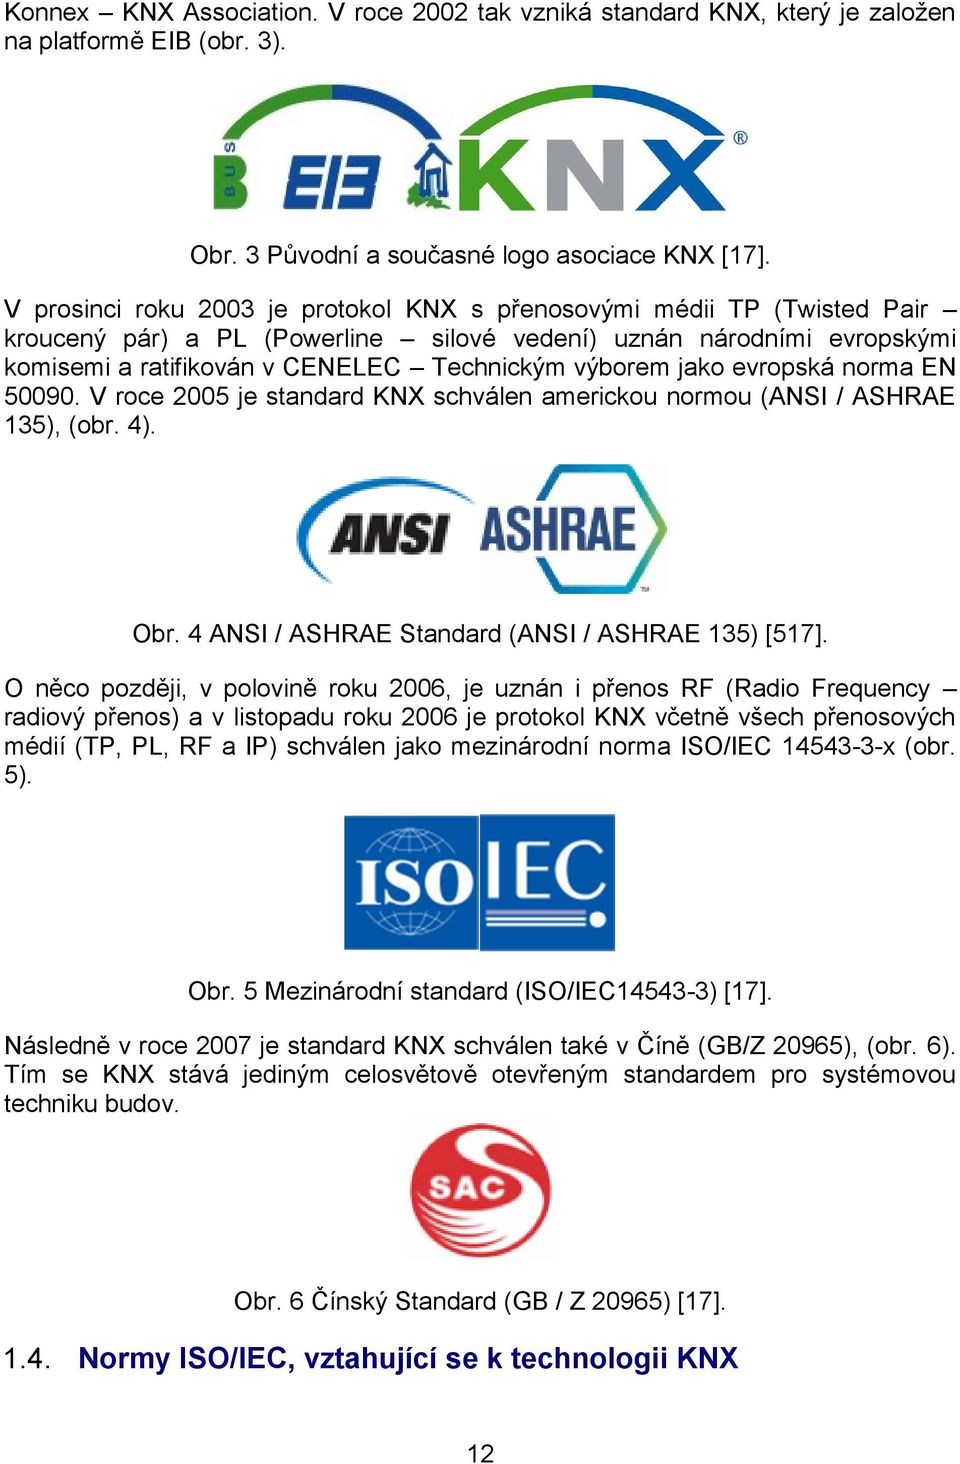 jako evropská norma EN 50090. V roce 2005 je standard KNX schválen americkou normou (ANSI / ASHRAE 135), (obr. 4). Obr. 4 ANSI / ASHRAE Standard (ANSI / ASHRAE 135) [517].